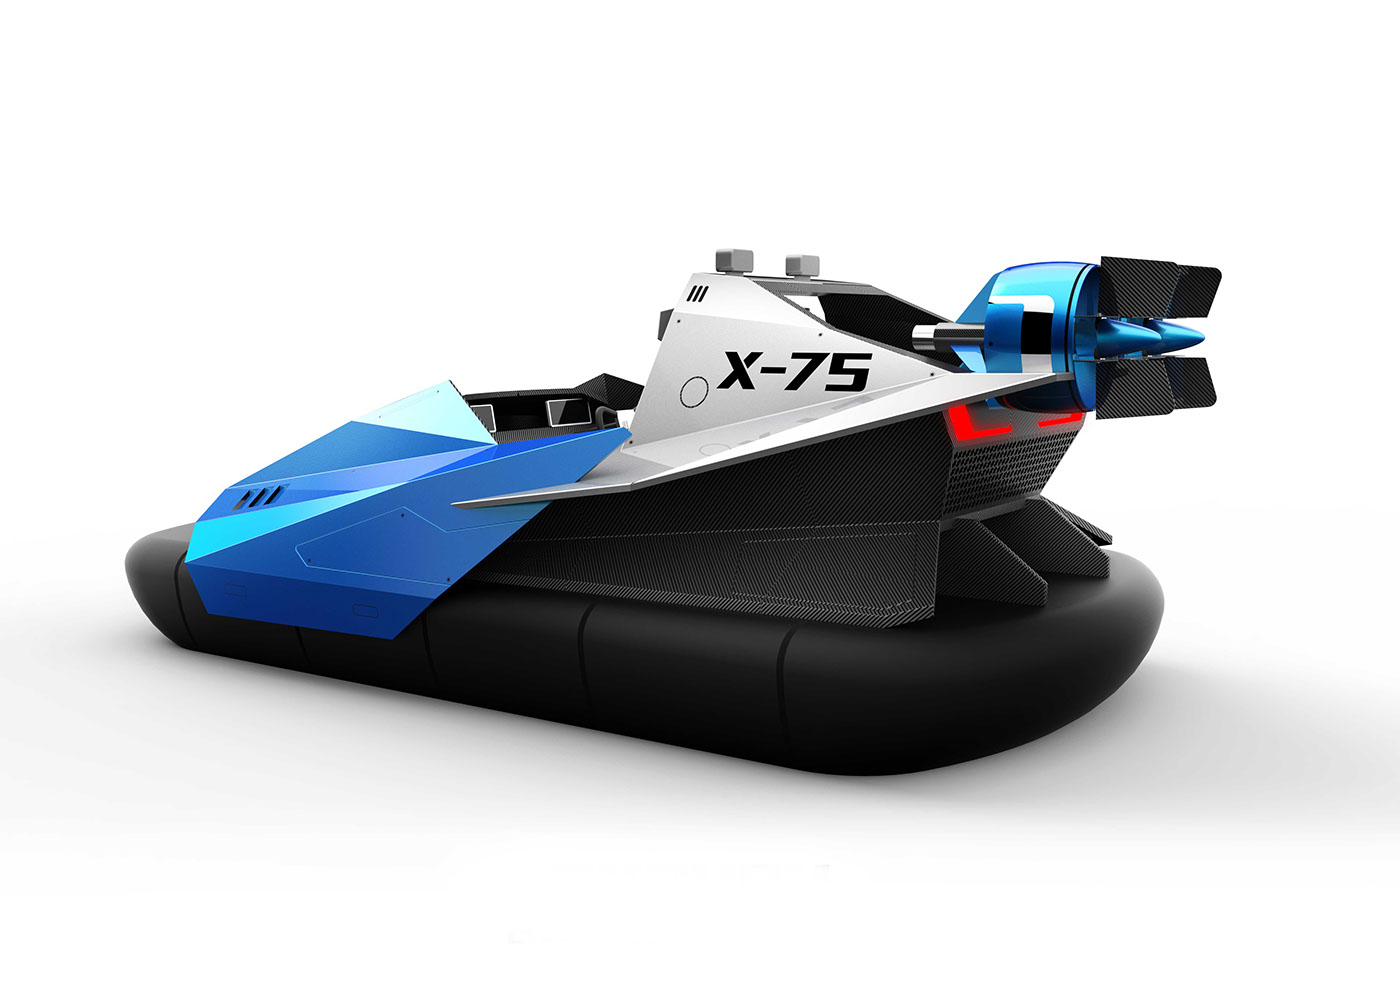 design jan bujnak 3D visualization concept hovercraft sketches sport concept design Future Concept Bombardier Design work future design Proposal